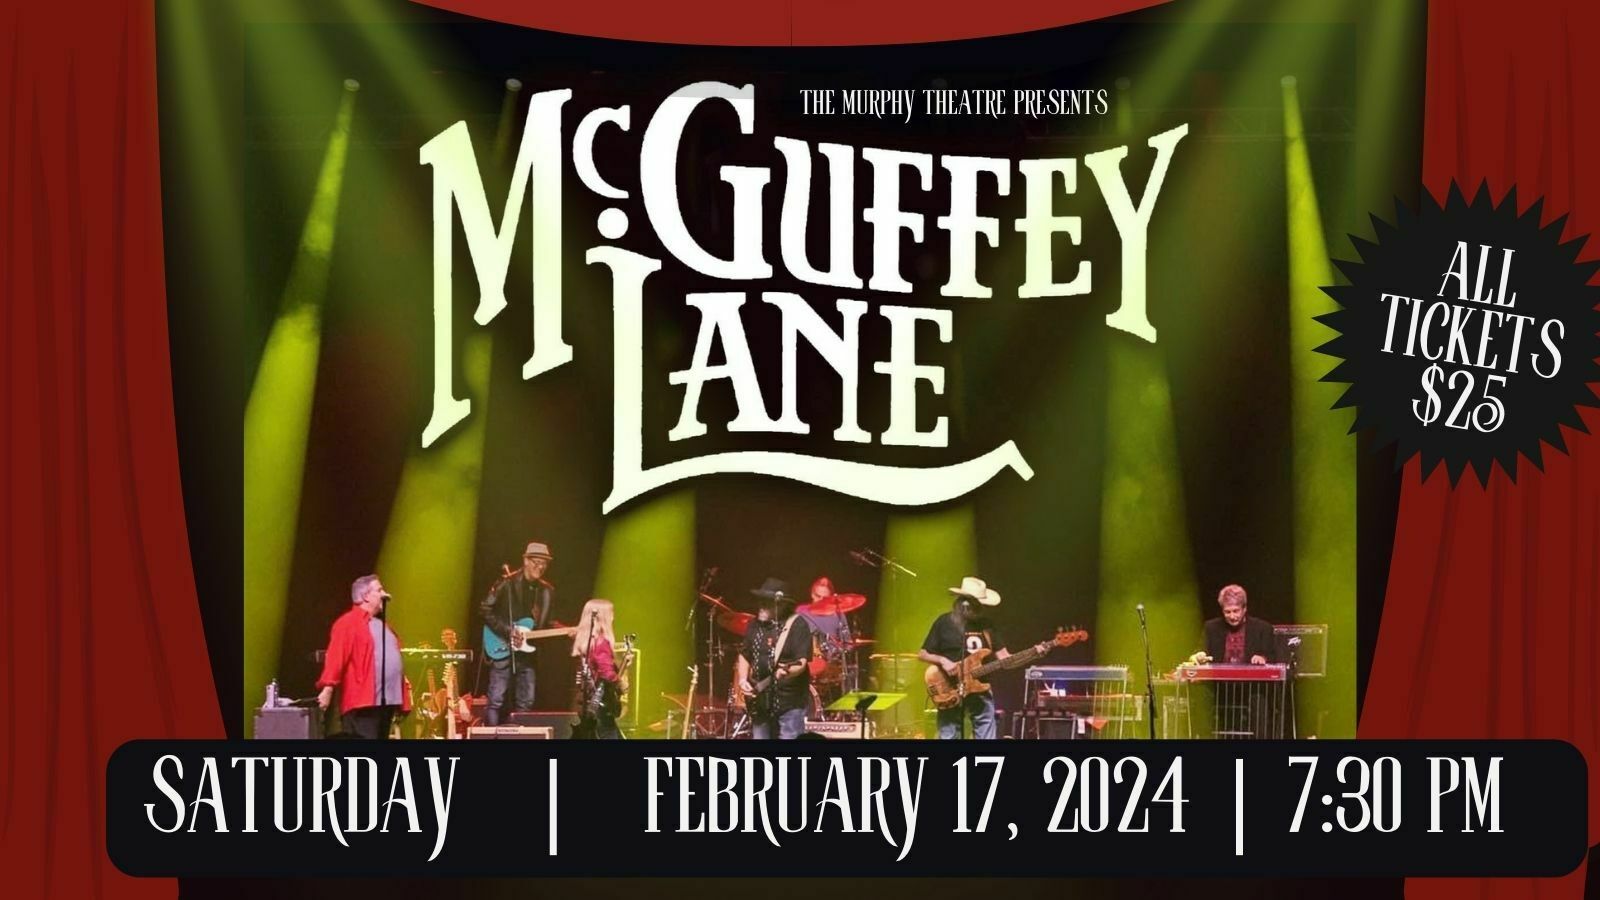 McGuffey Lane at The Murphy Theatre, Wilmington, Ohio, United States